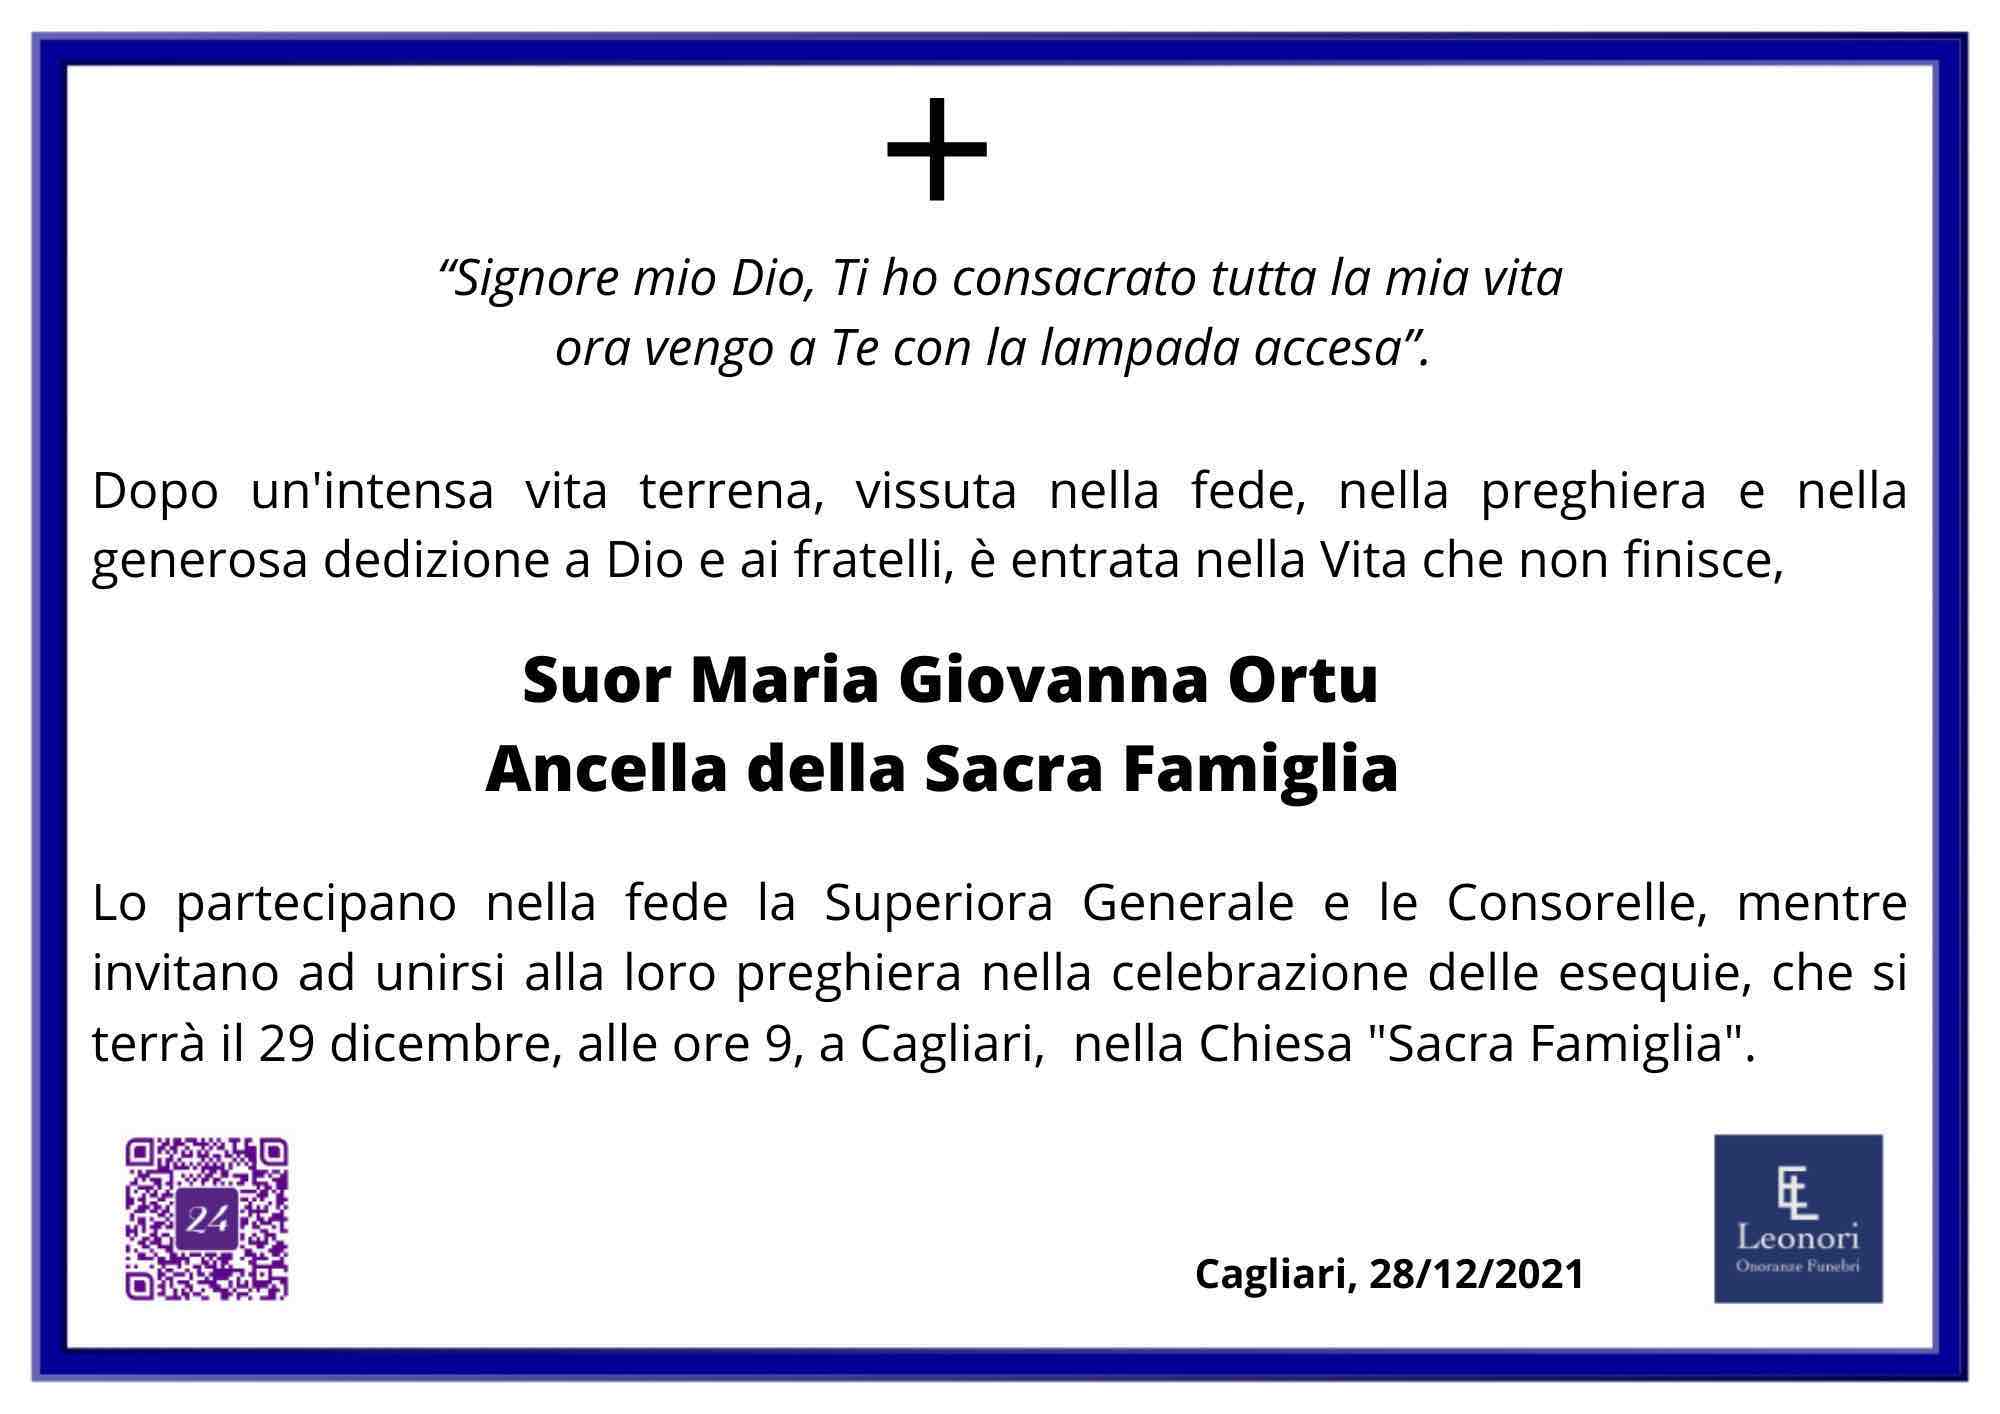 Suor Maria Giovanna Ortu